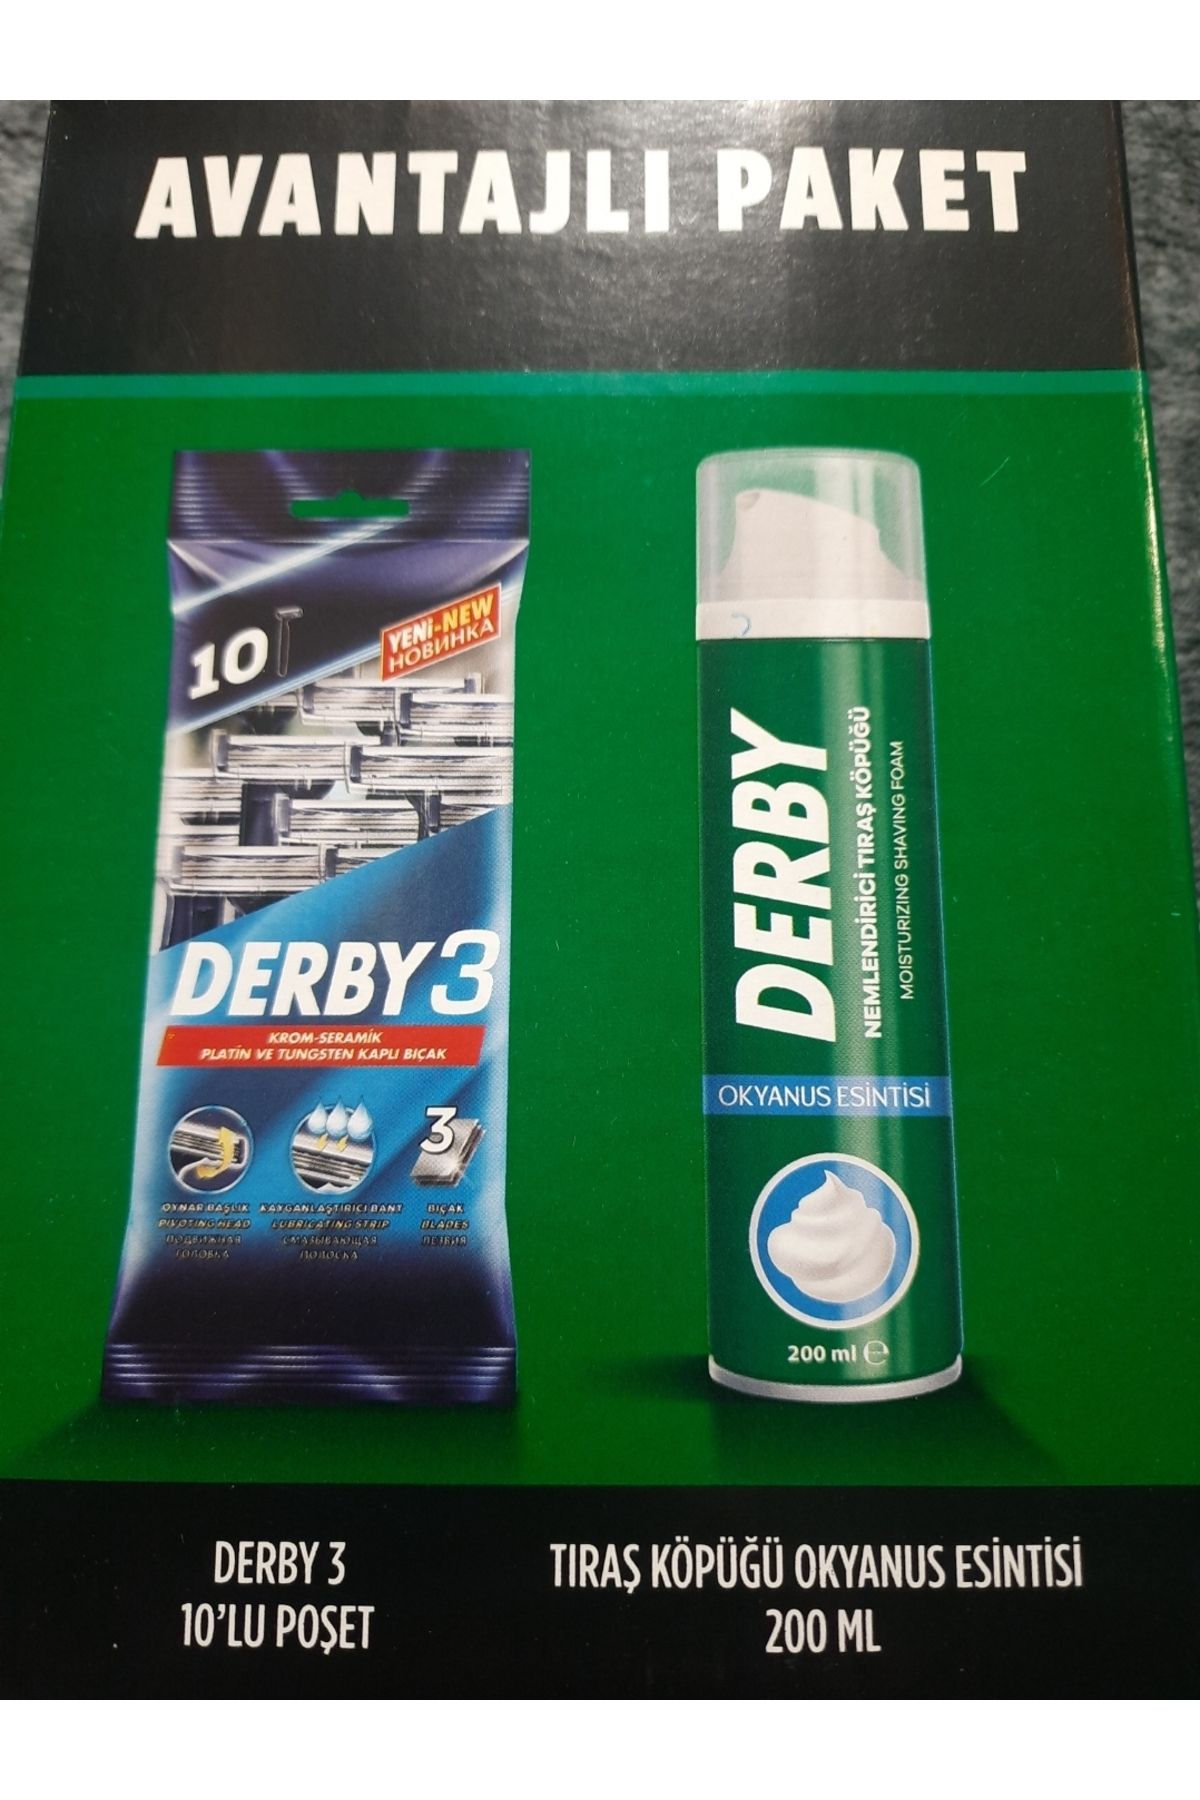 Derby Derby samurai avantajlı paket